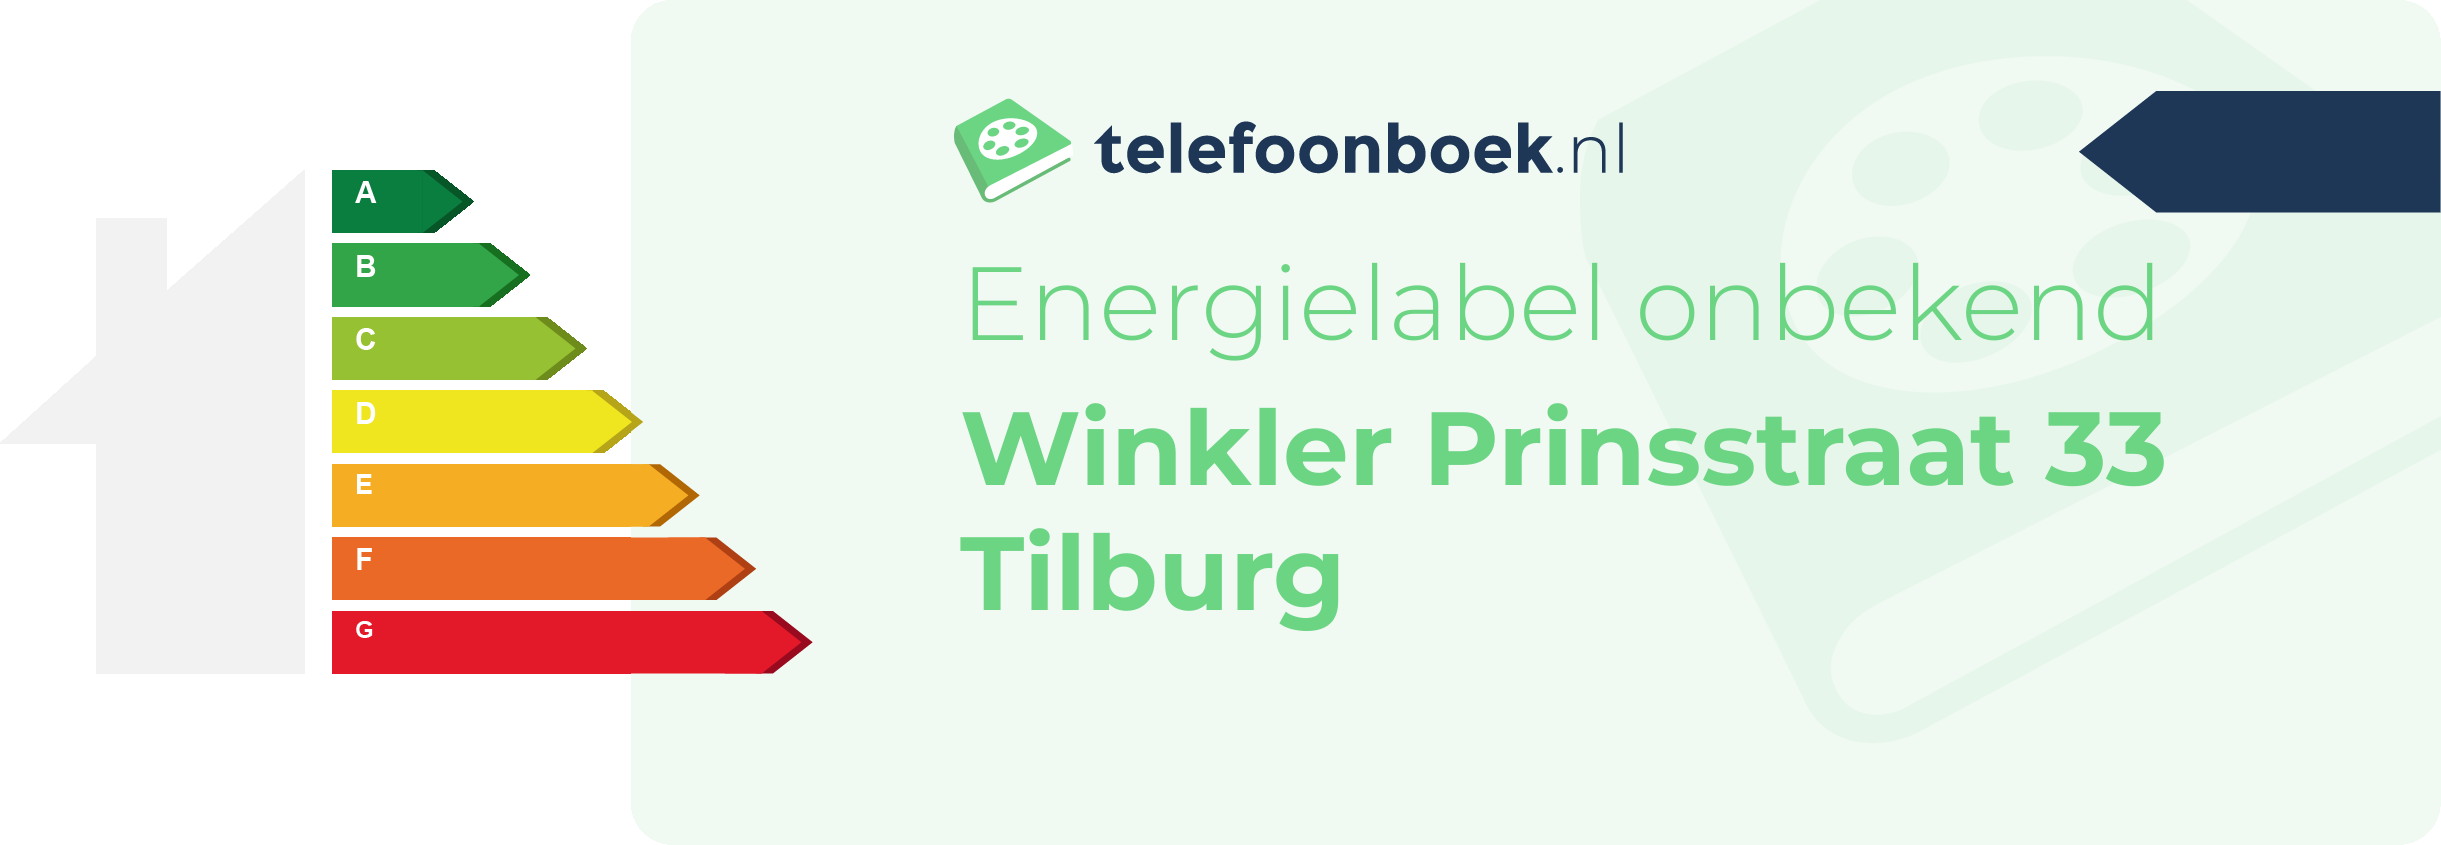 Energielabel Winkler Prinsstraat 33 Tilburg